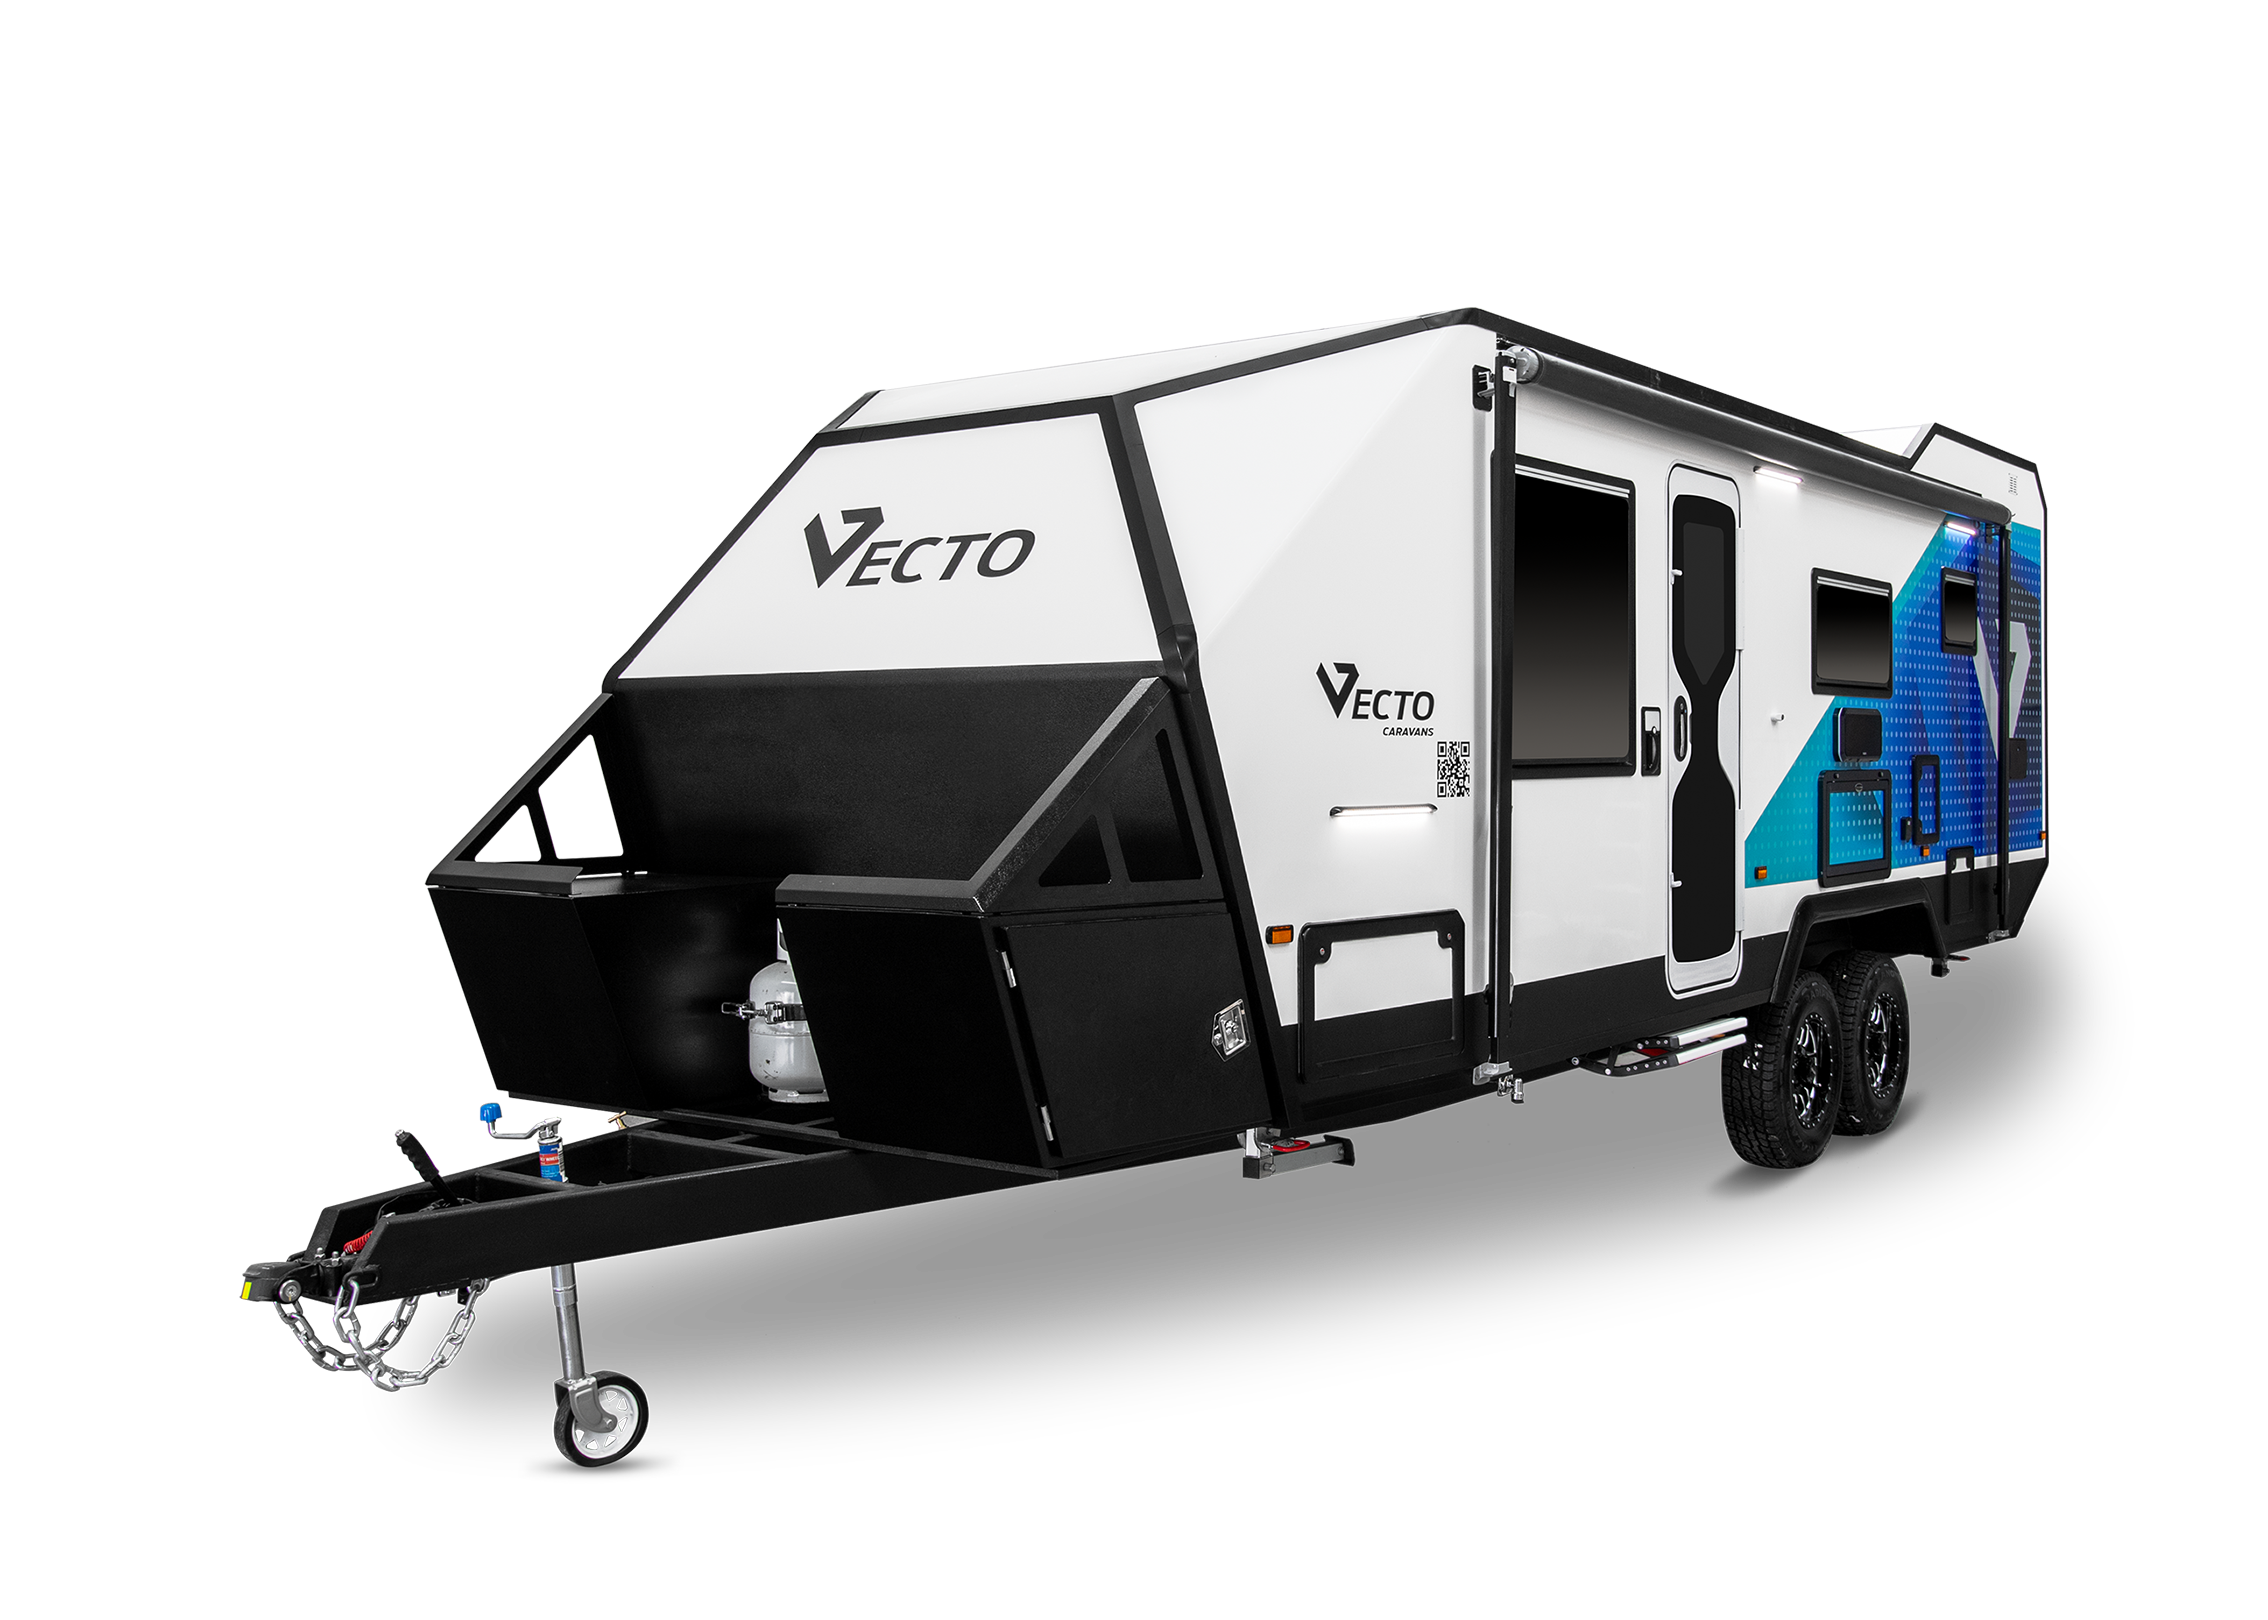 22F Family - Vecto Caravans